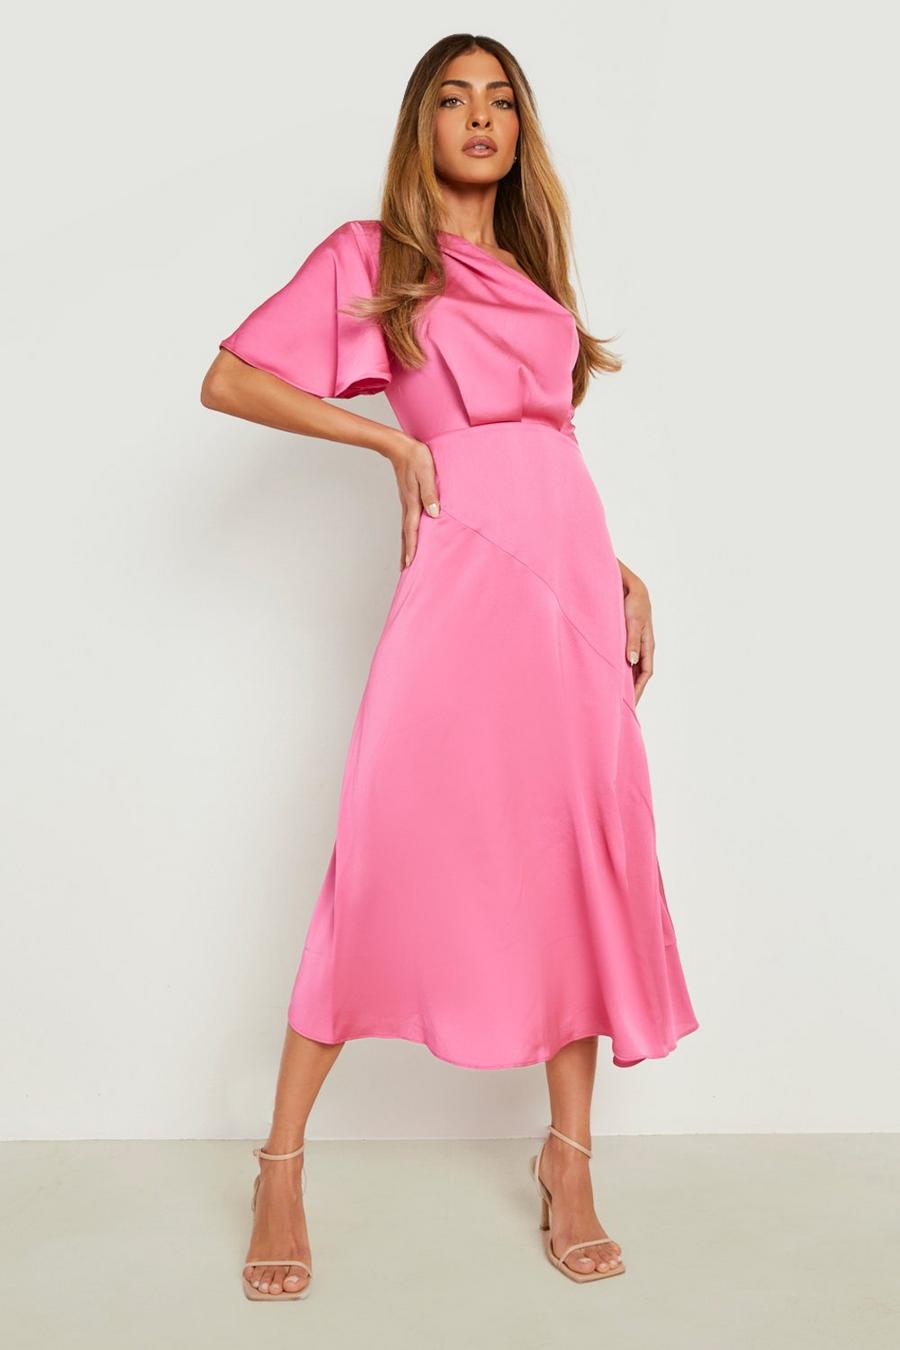 Hot pink Satin Asymmetric Midaxi Dress